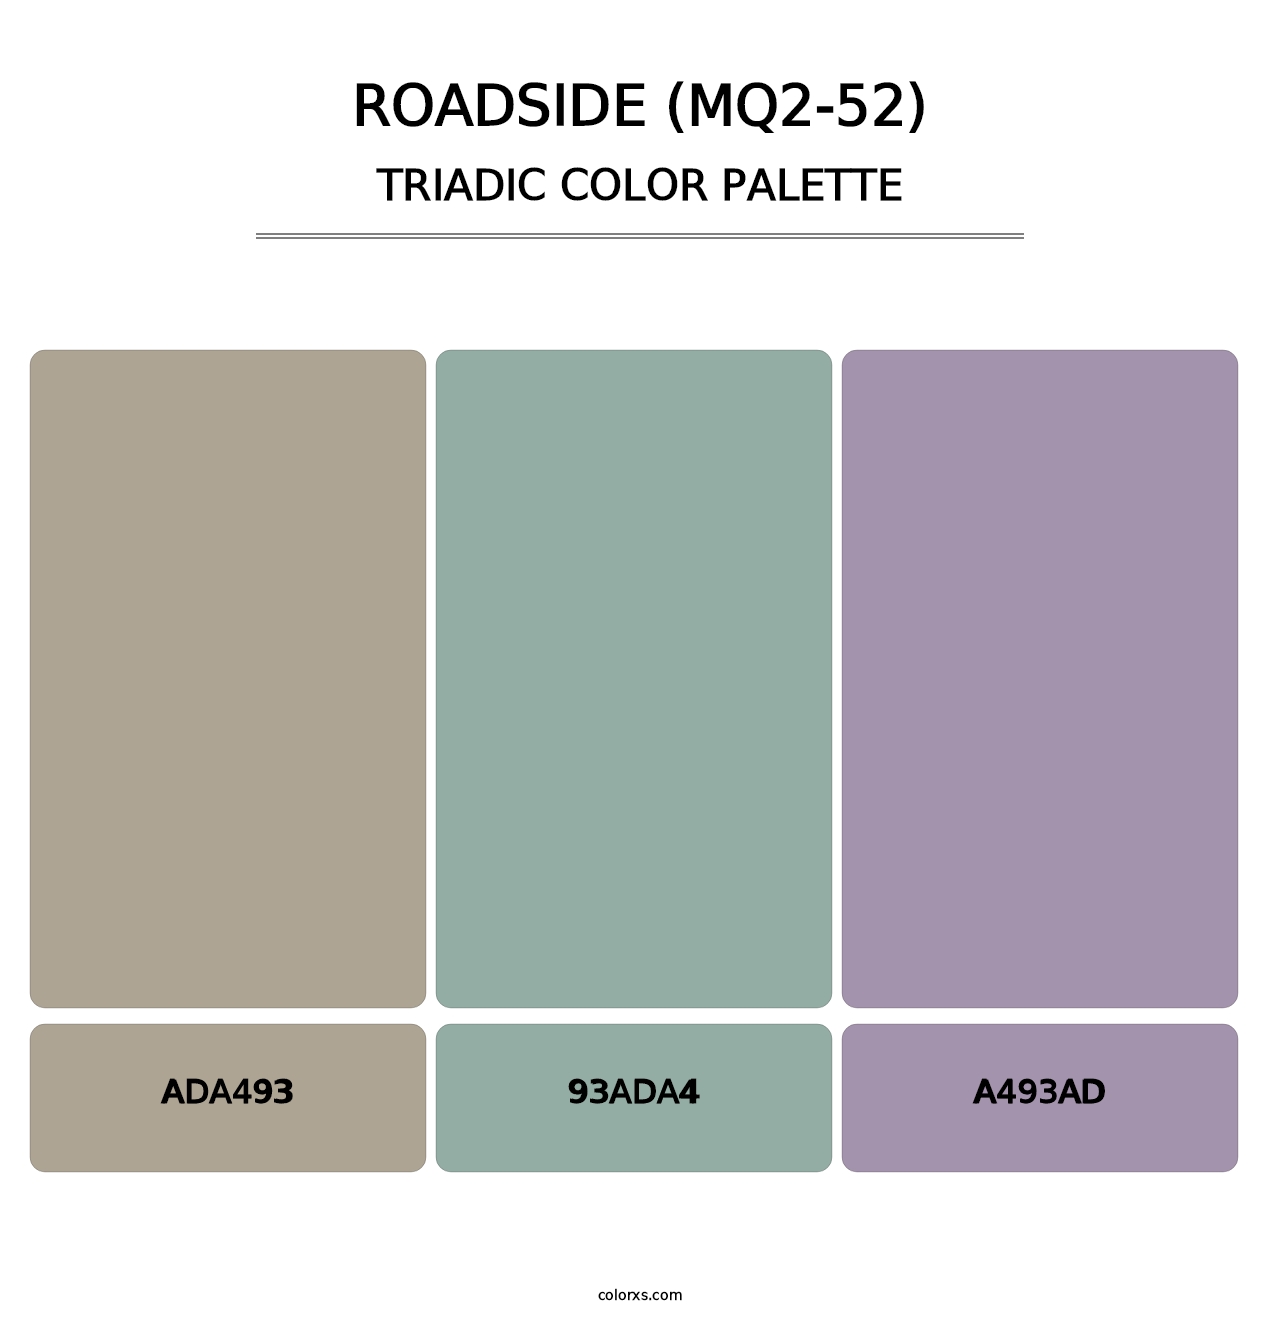 Roadside (MQ2-52) - Triadic Color Palette